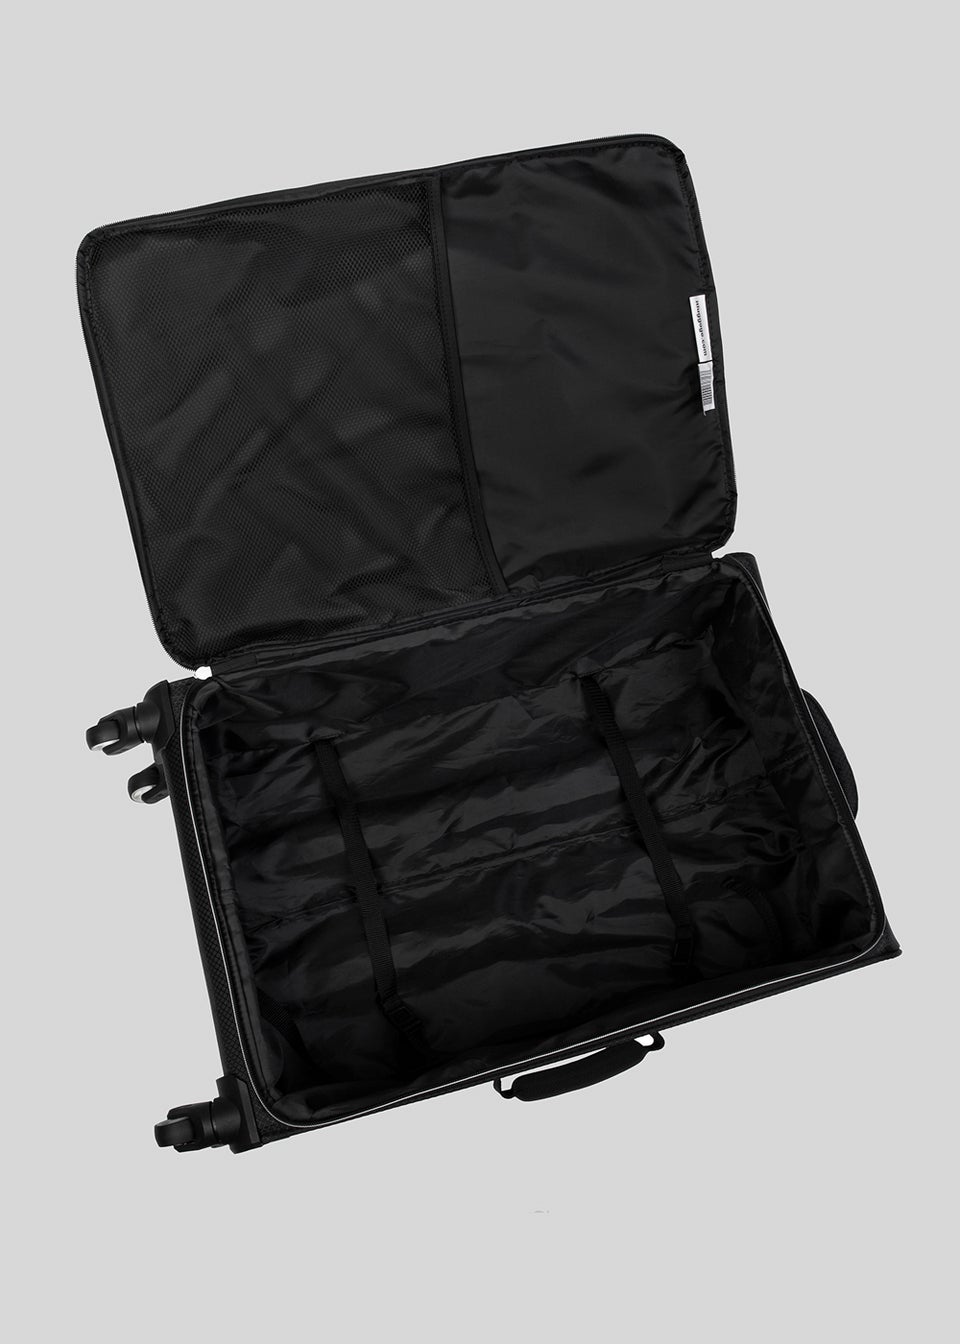 IT Luggage Navigator Black Soft Shell Suitcase